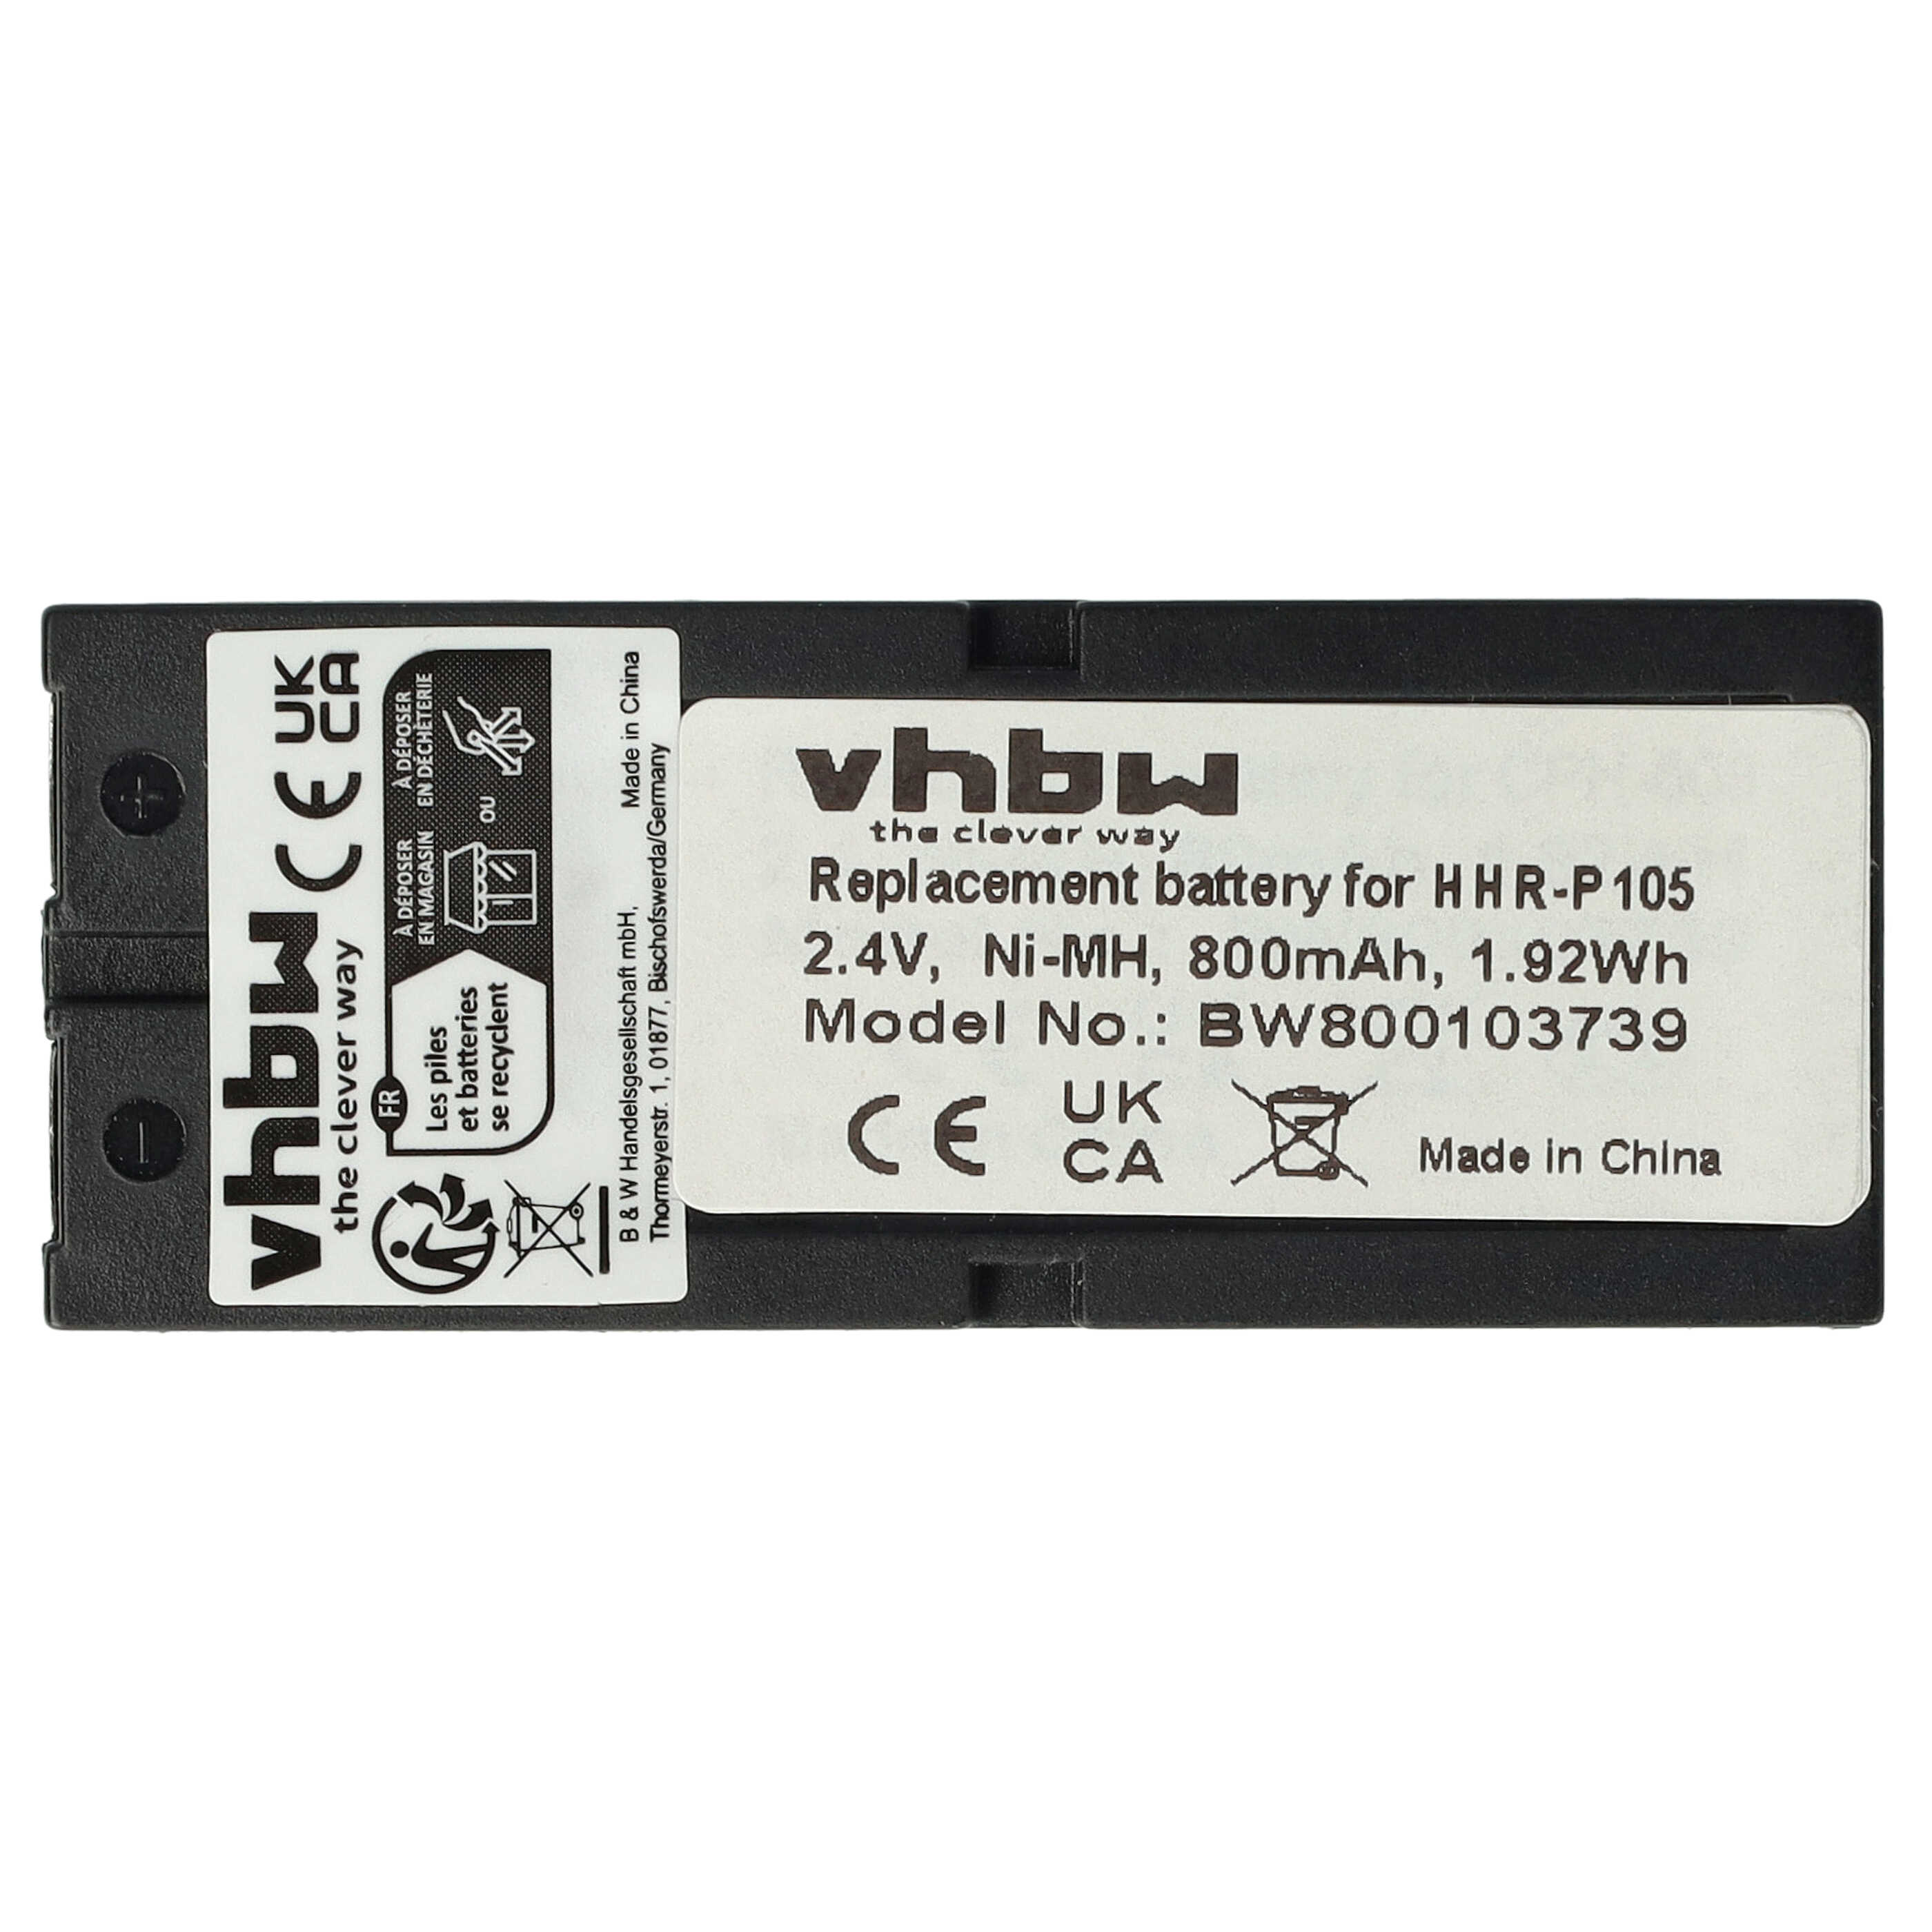 Landline Phone Battery Replacement for CPH-508 - 800mAh 2.4V NiMH